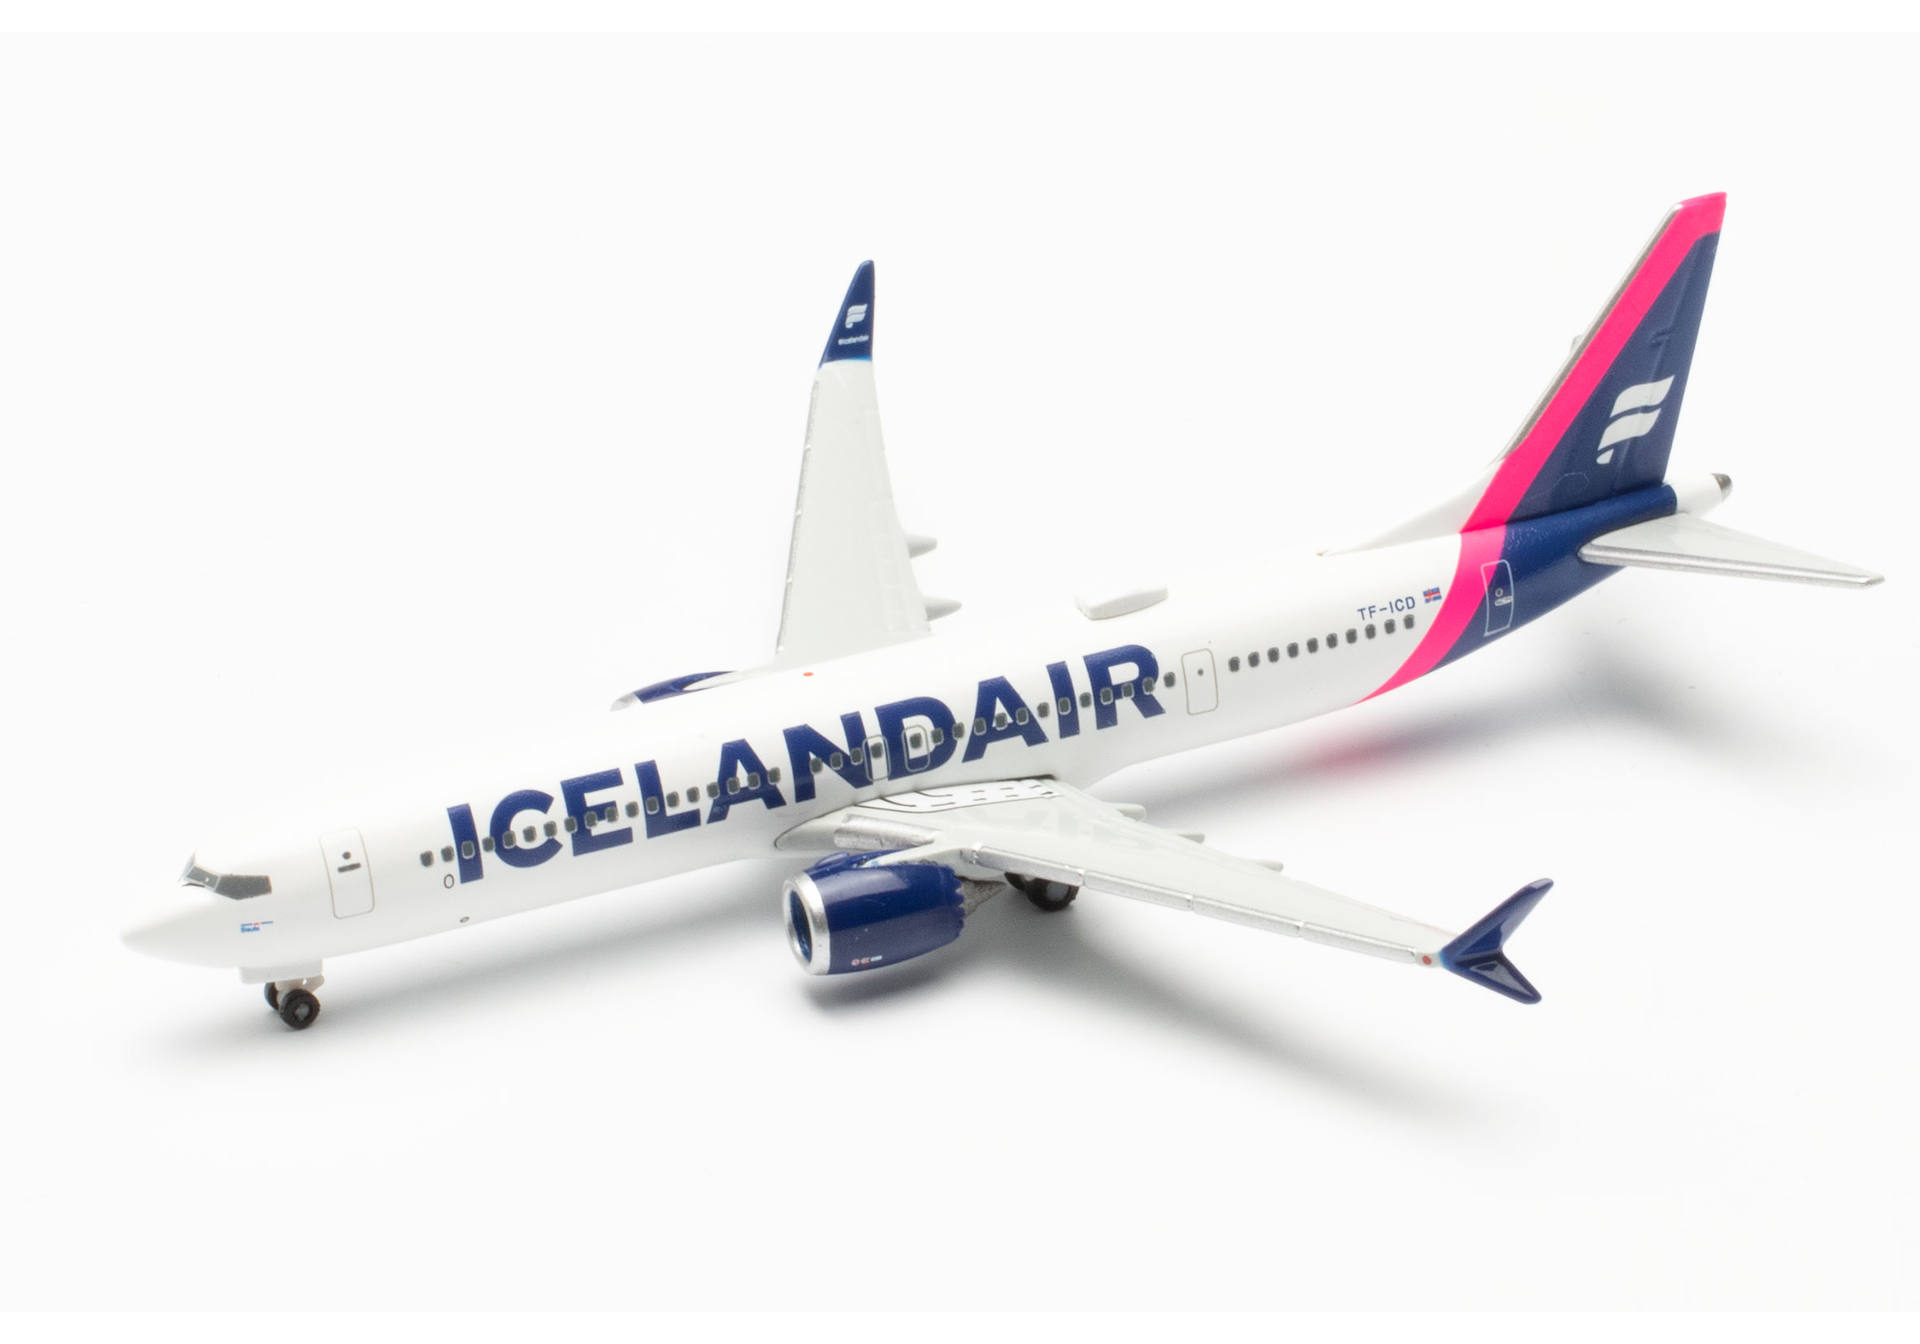 Icelandair Boeing 737 Max 9 - magenta tail stripe - TF-ICD "Baula"